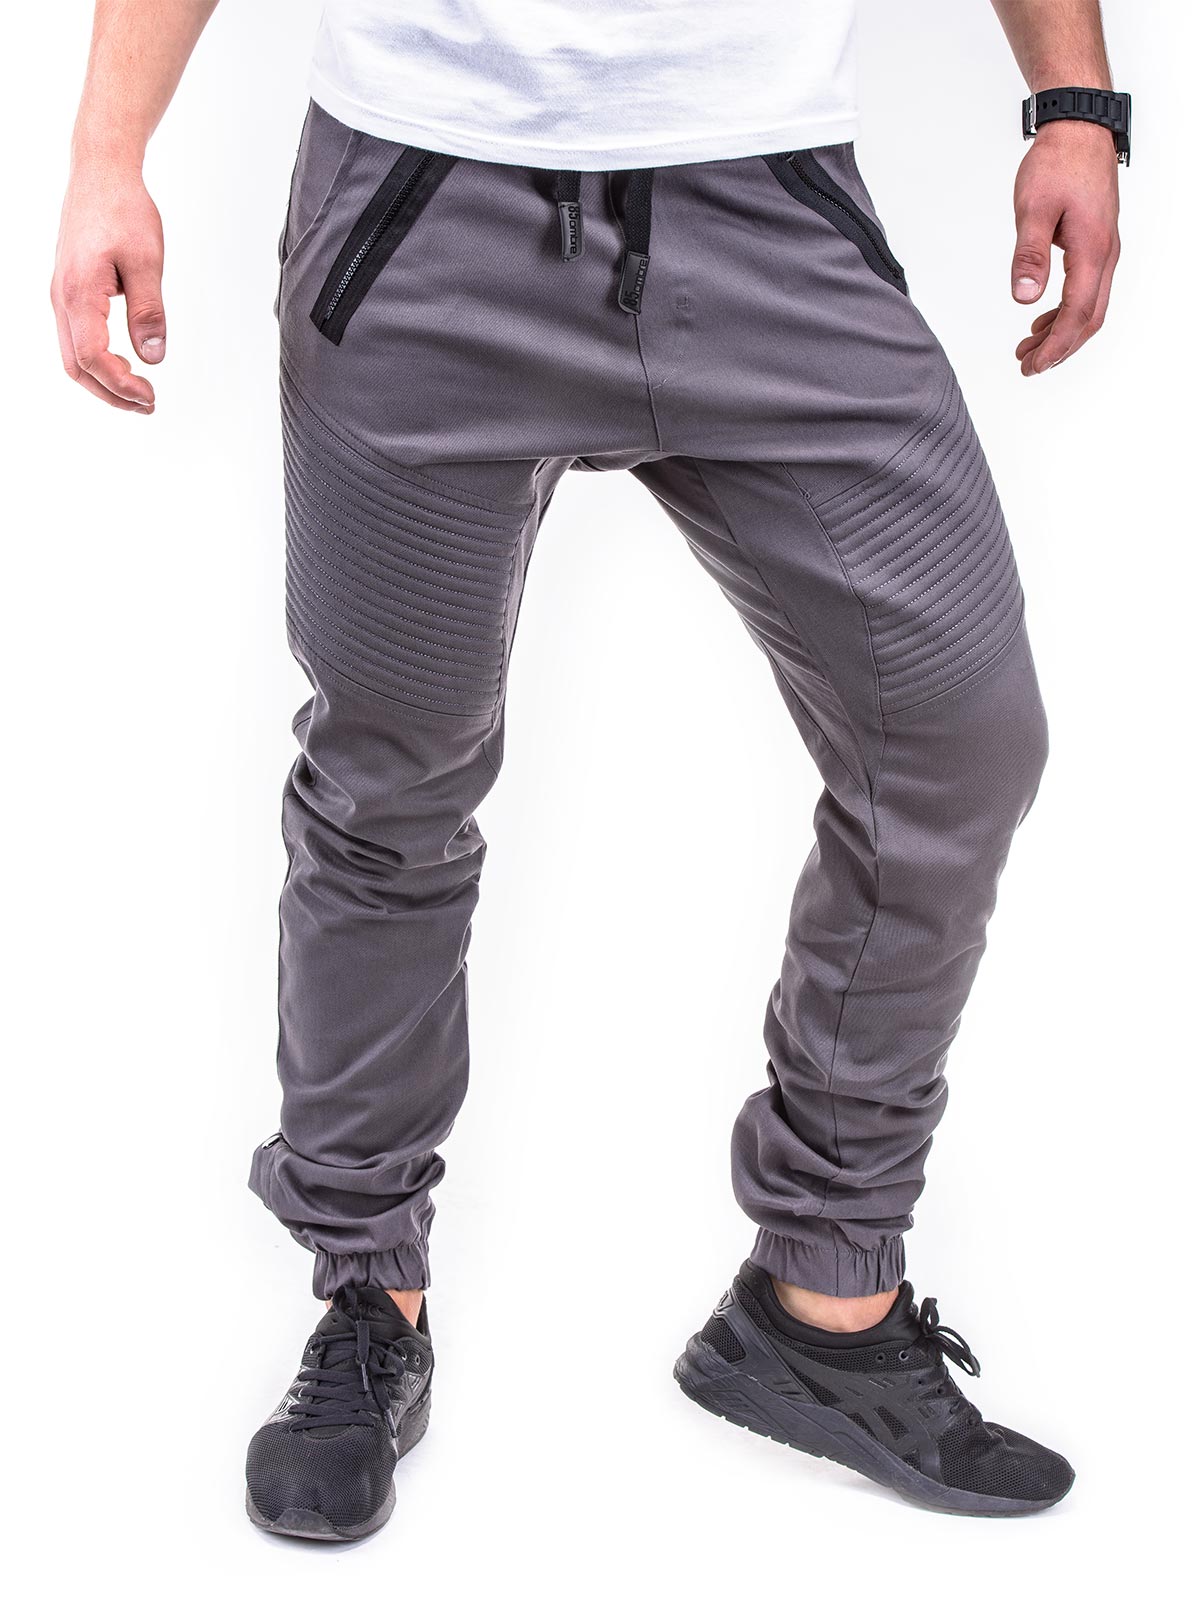 Men's pants joggers P389 - dark grey | MODONE wholesale - Clothing For Men